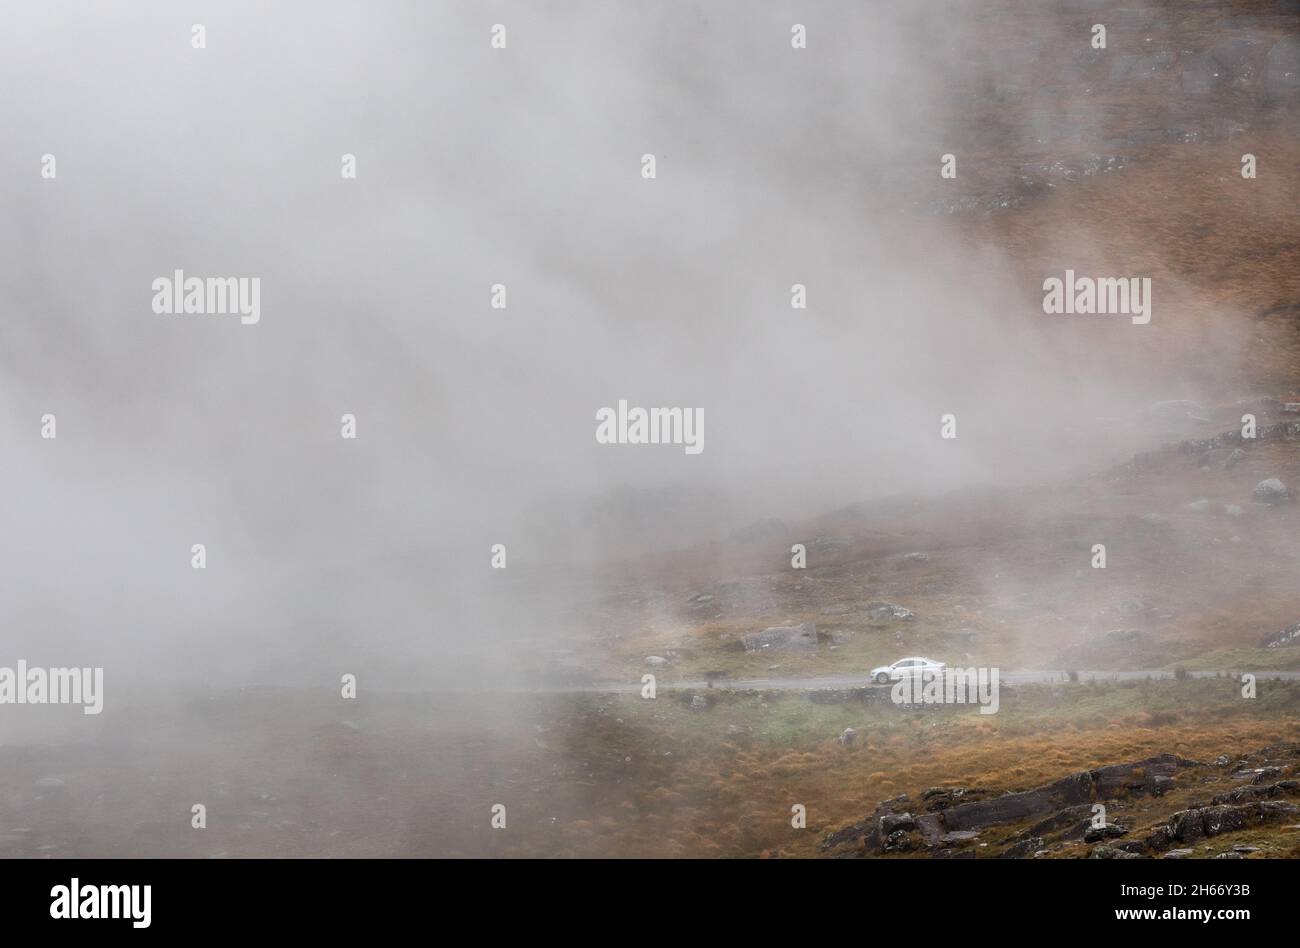 Healy Pass, Cork, Irland. November 2021. Ein Auto fährt langsam die schmale Bergstraße entlang, während Nebel und Nebel auf dem Healy Pass, Co. Cork, Irland, herabsteigen. - Bild; David Creedon / Alamy Live News Stockfoto